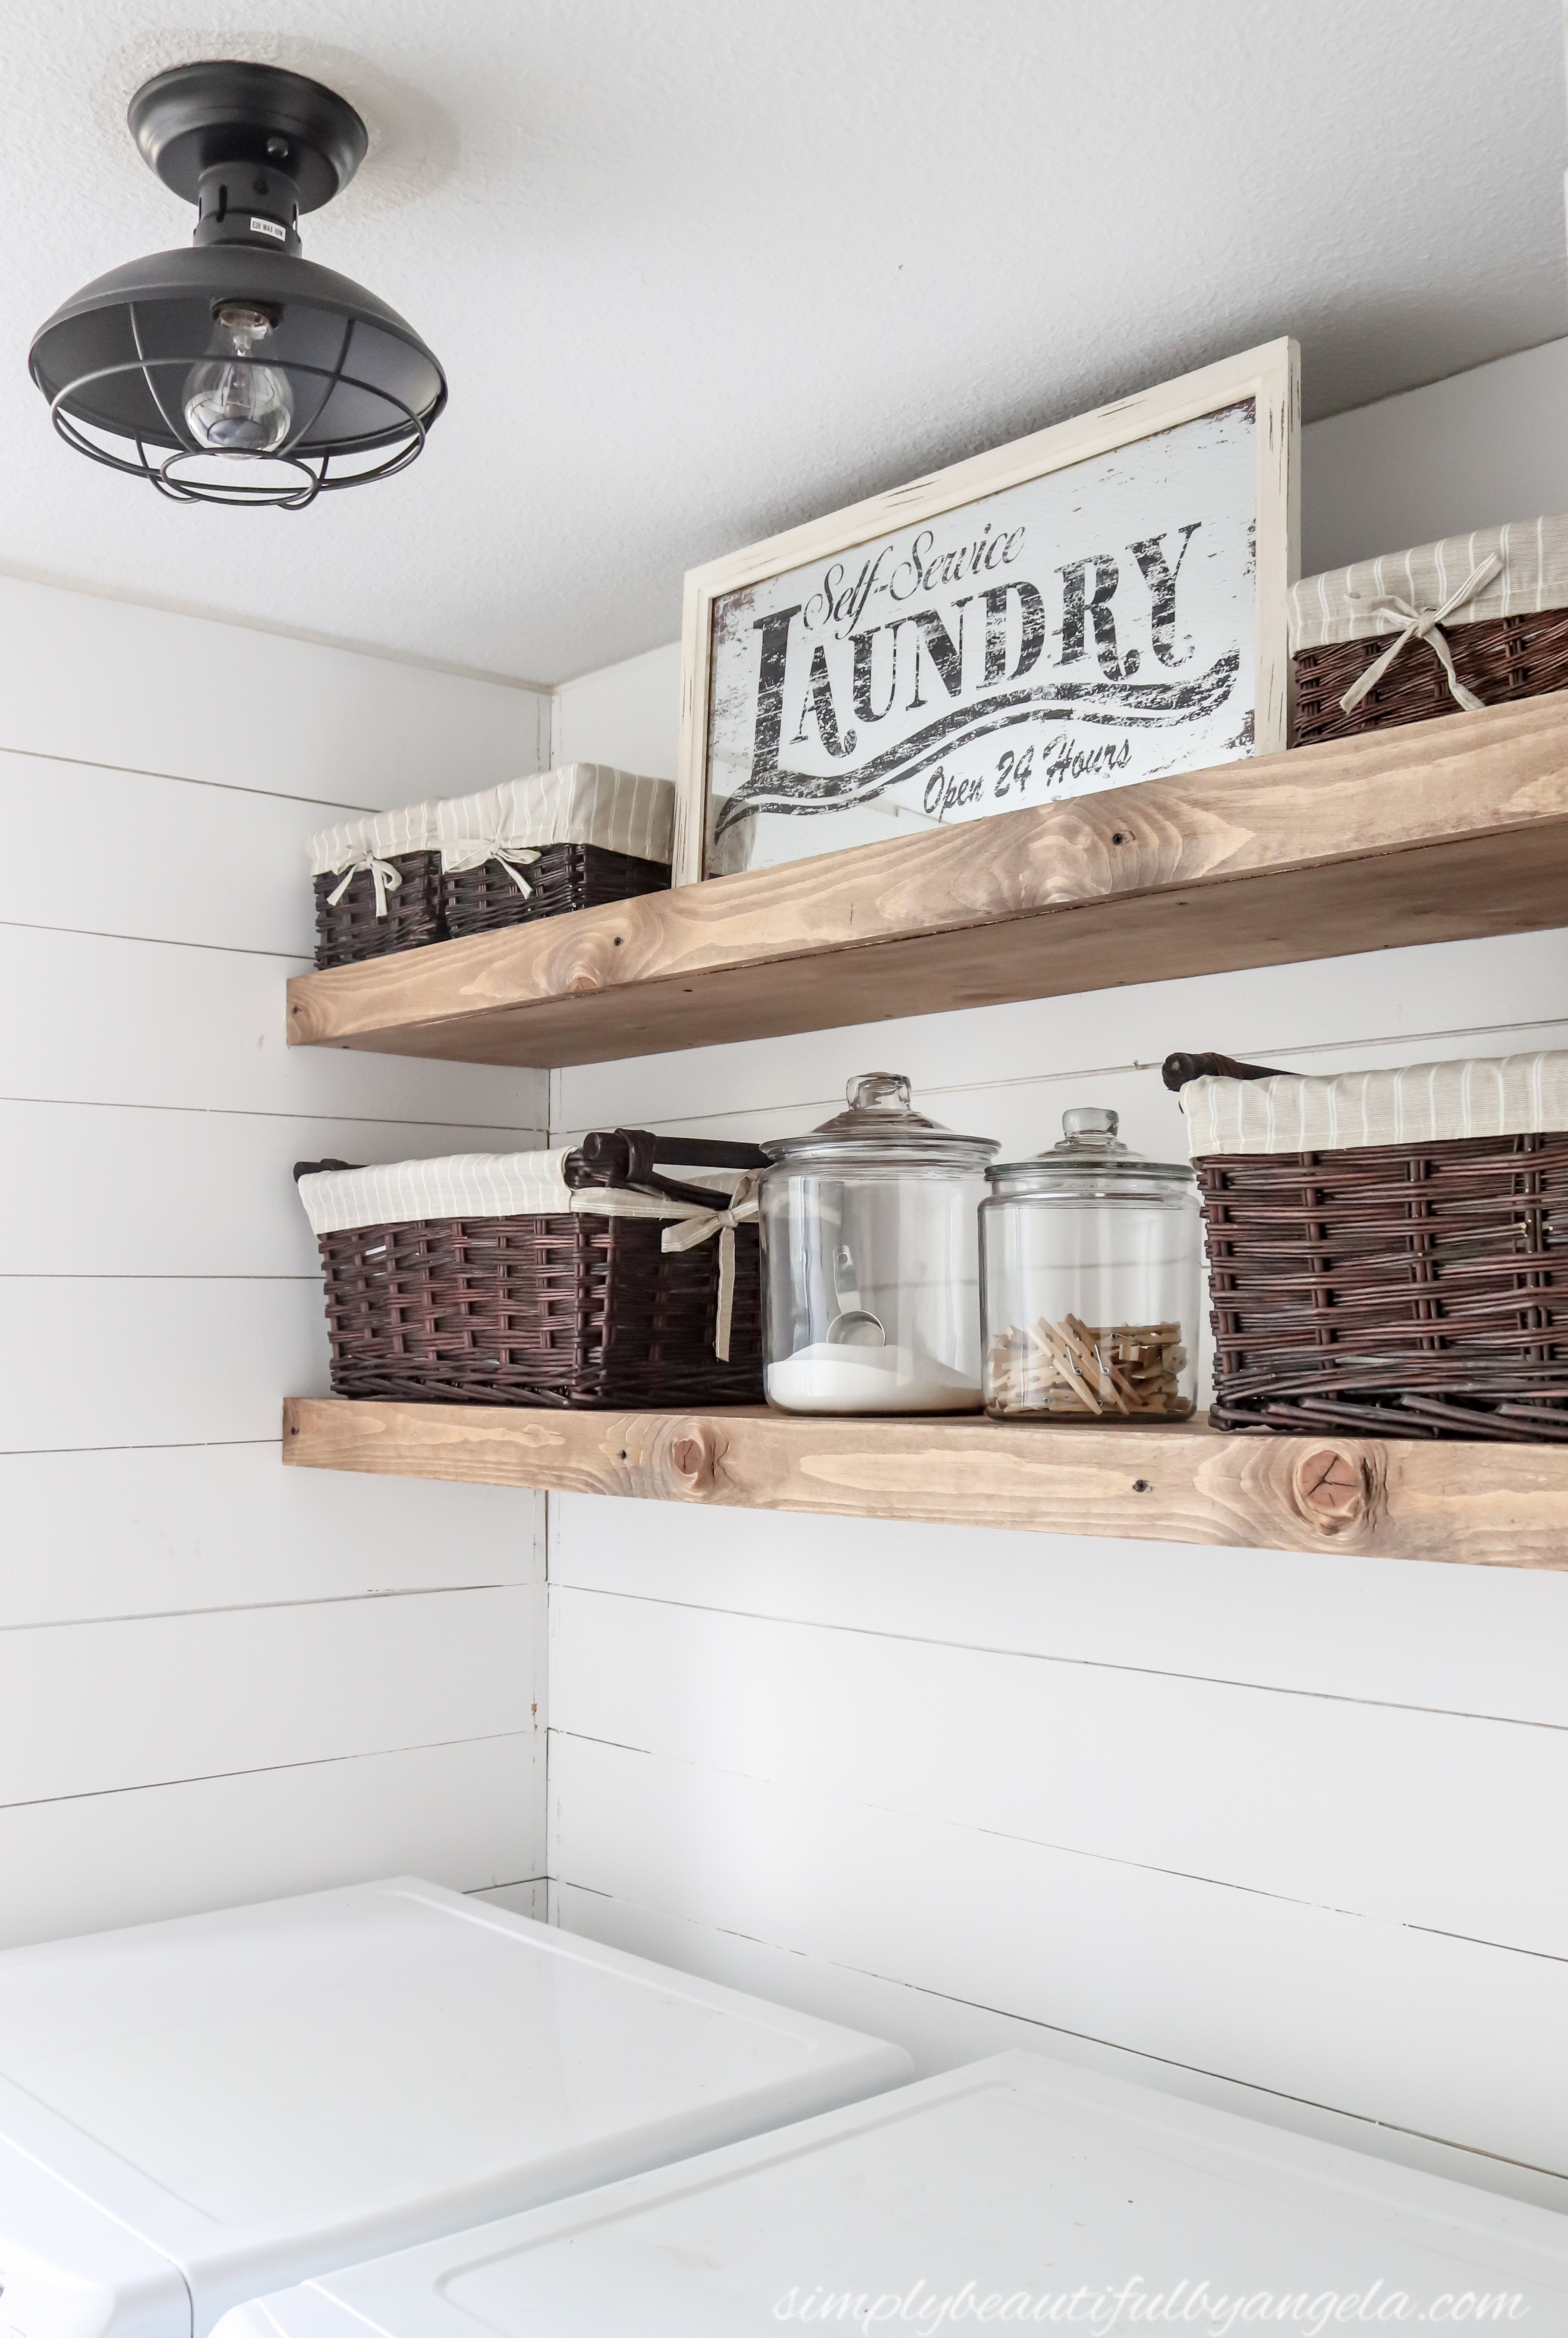 https://simplybeautifulbyangela.com/wp-content/uploads/2018/11/DIY-Rustic-Farmhouse-Laundry-Room-Floating-Shelves-16.jpg